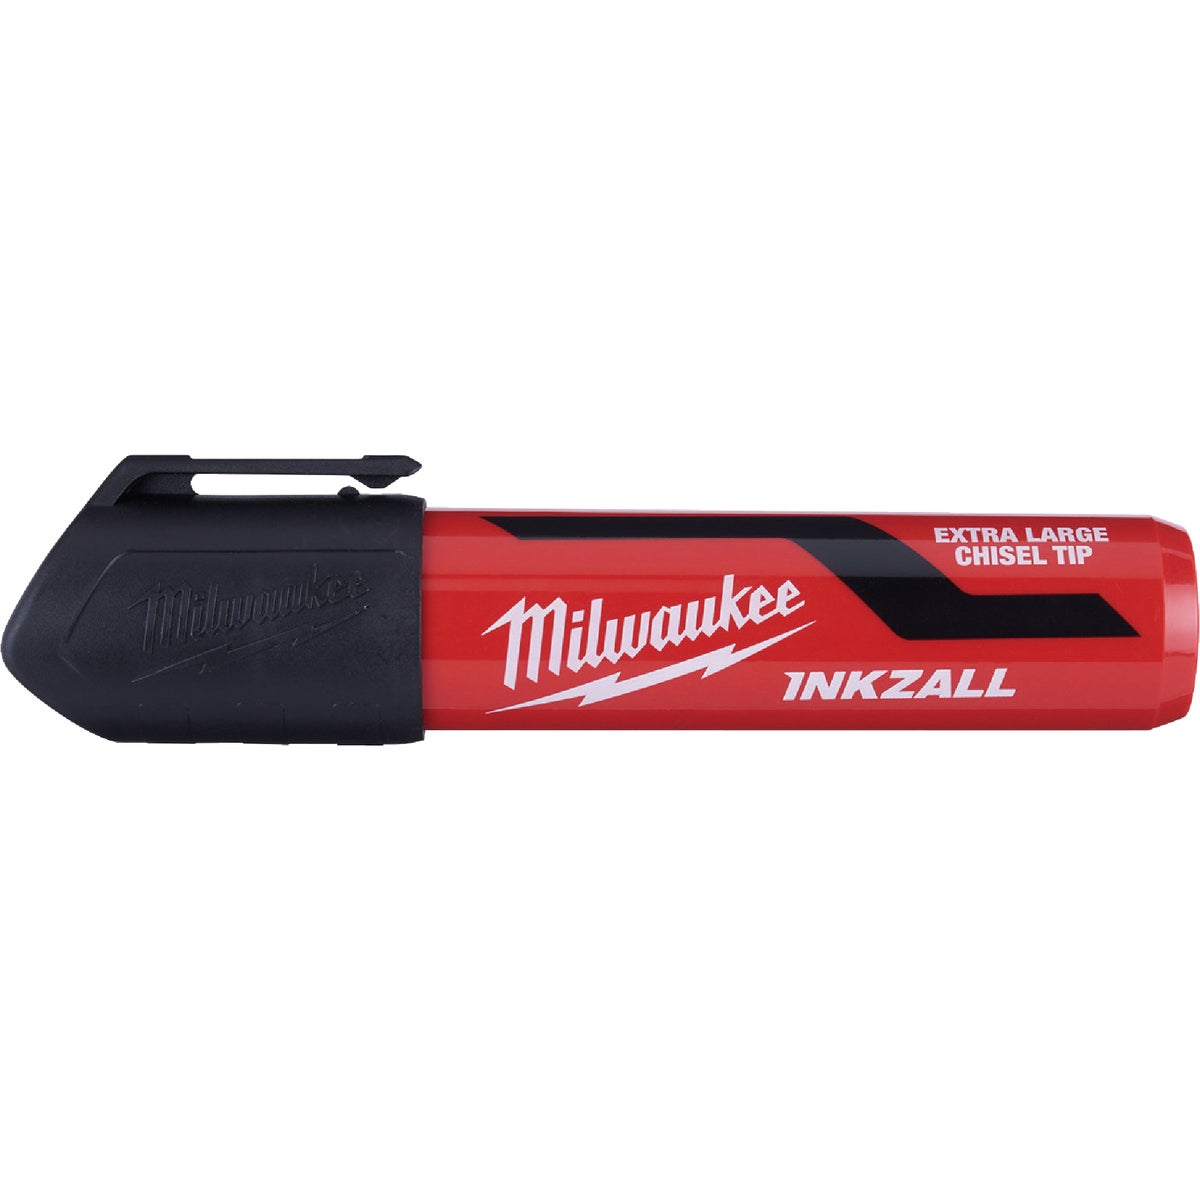 Milwaukee INKZALL Extra Large Chisel Tip Black Job Site Marker